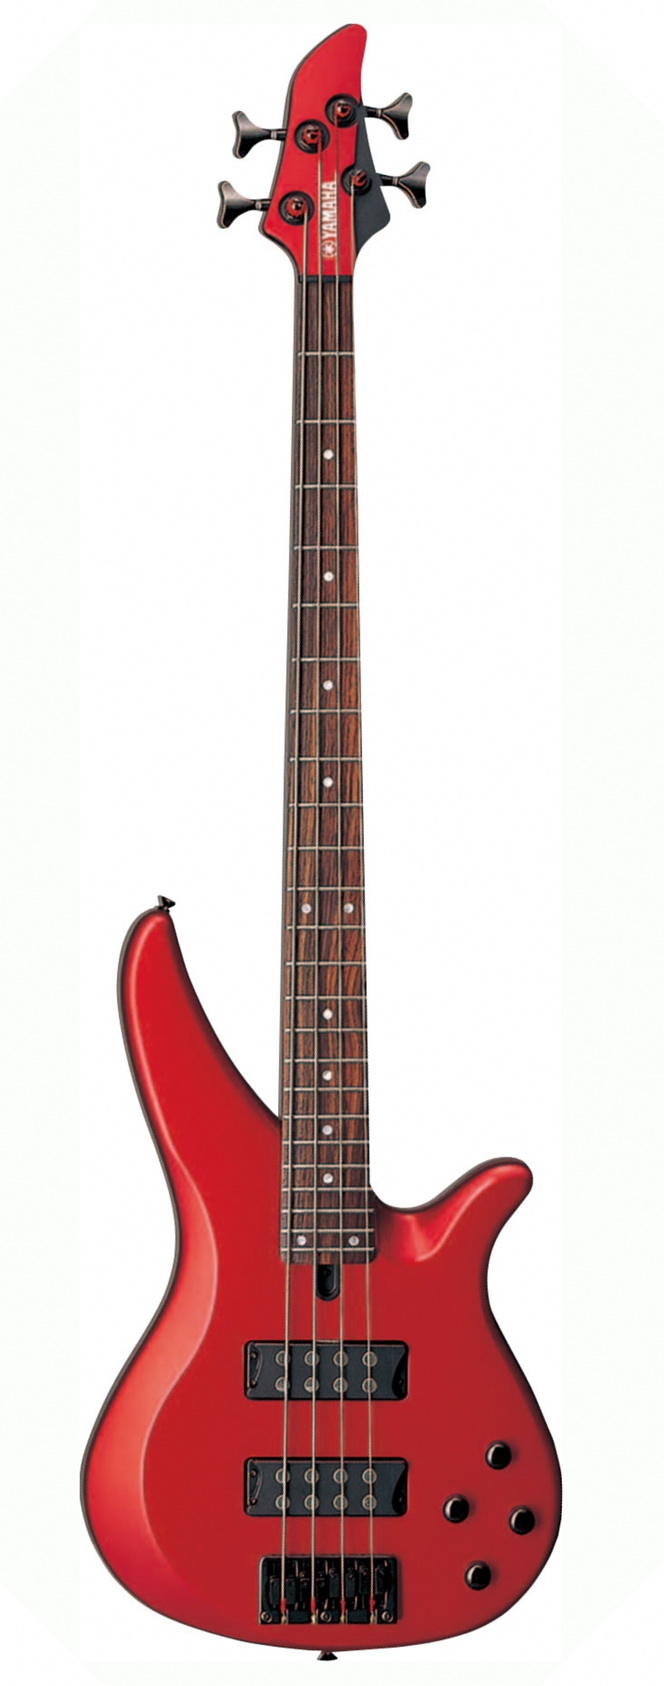 Бас-гитара Yamaha RBX-374 Red Metallic